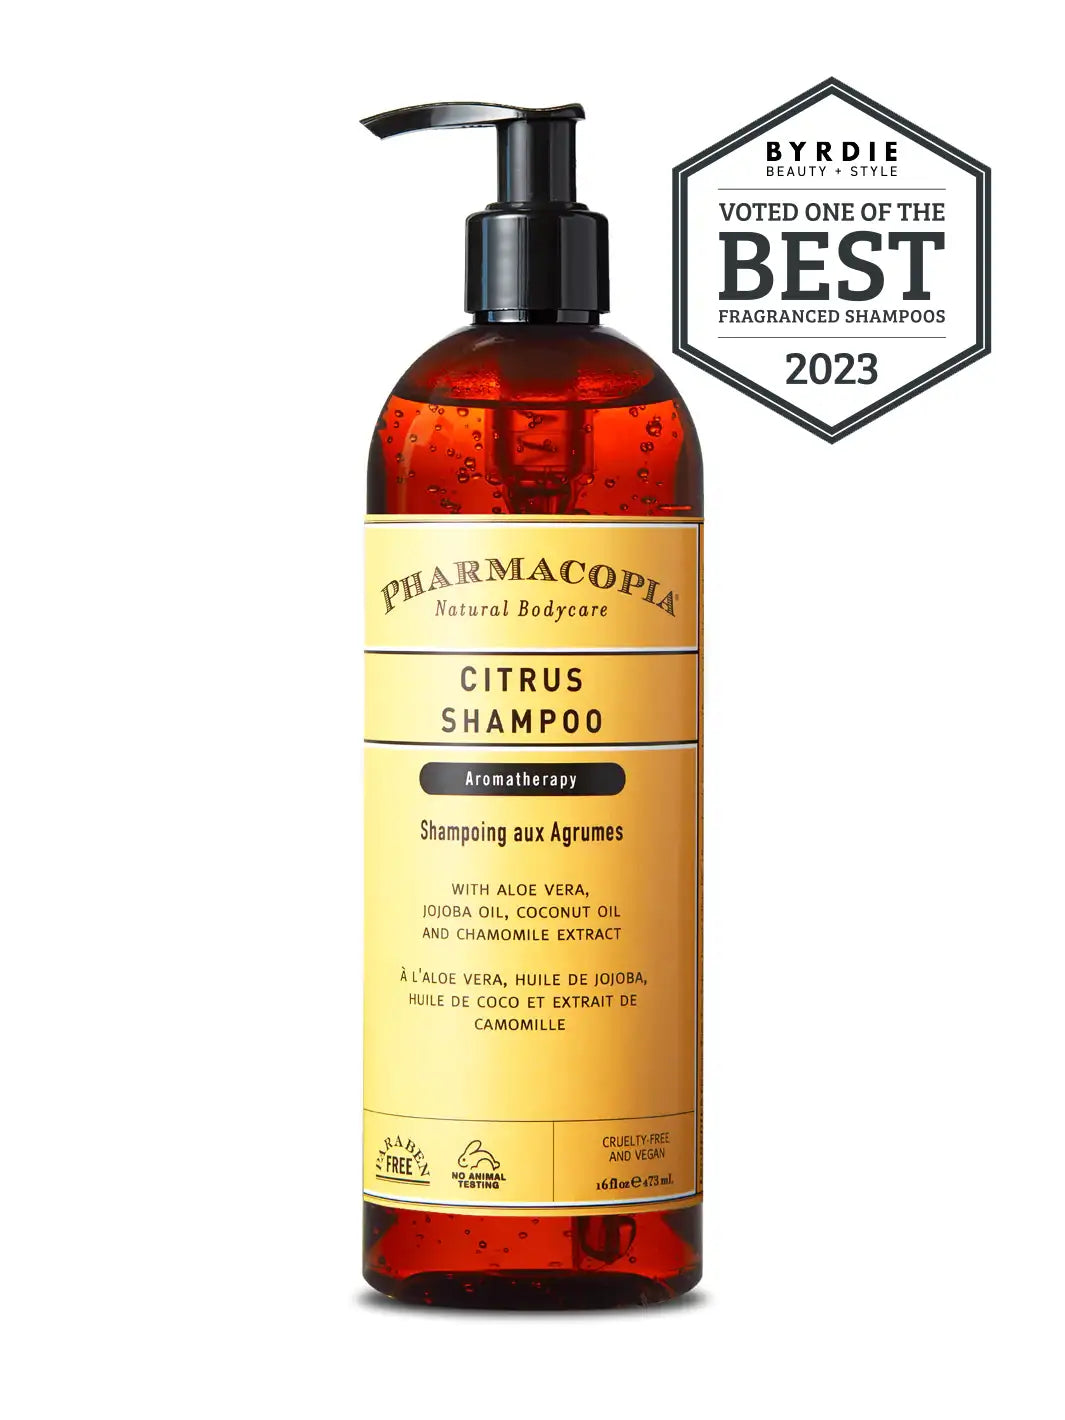 Pharmacopia Citrus Hair Shampoo 16 oz Bottle